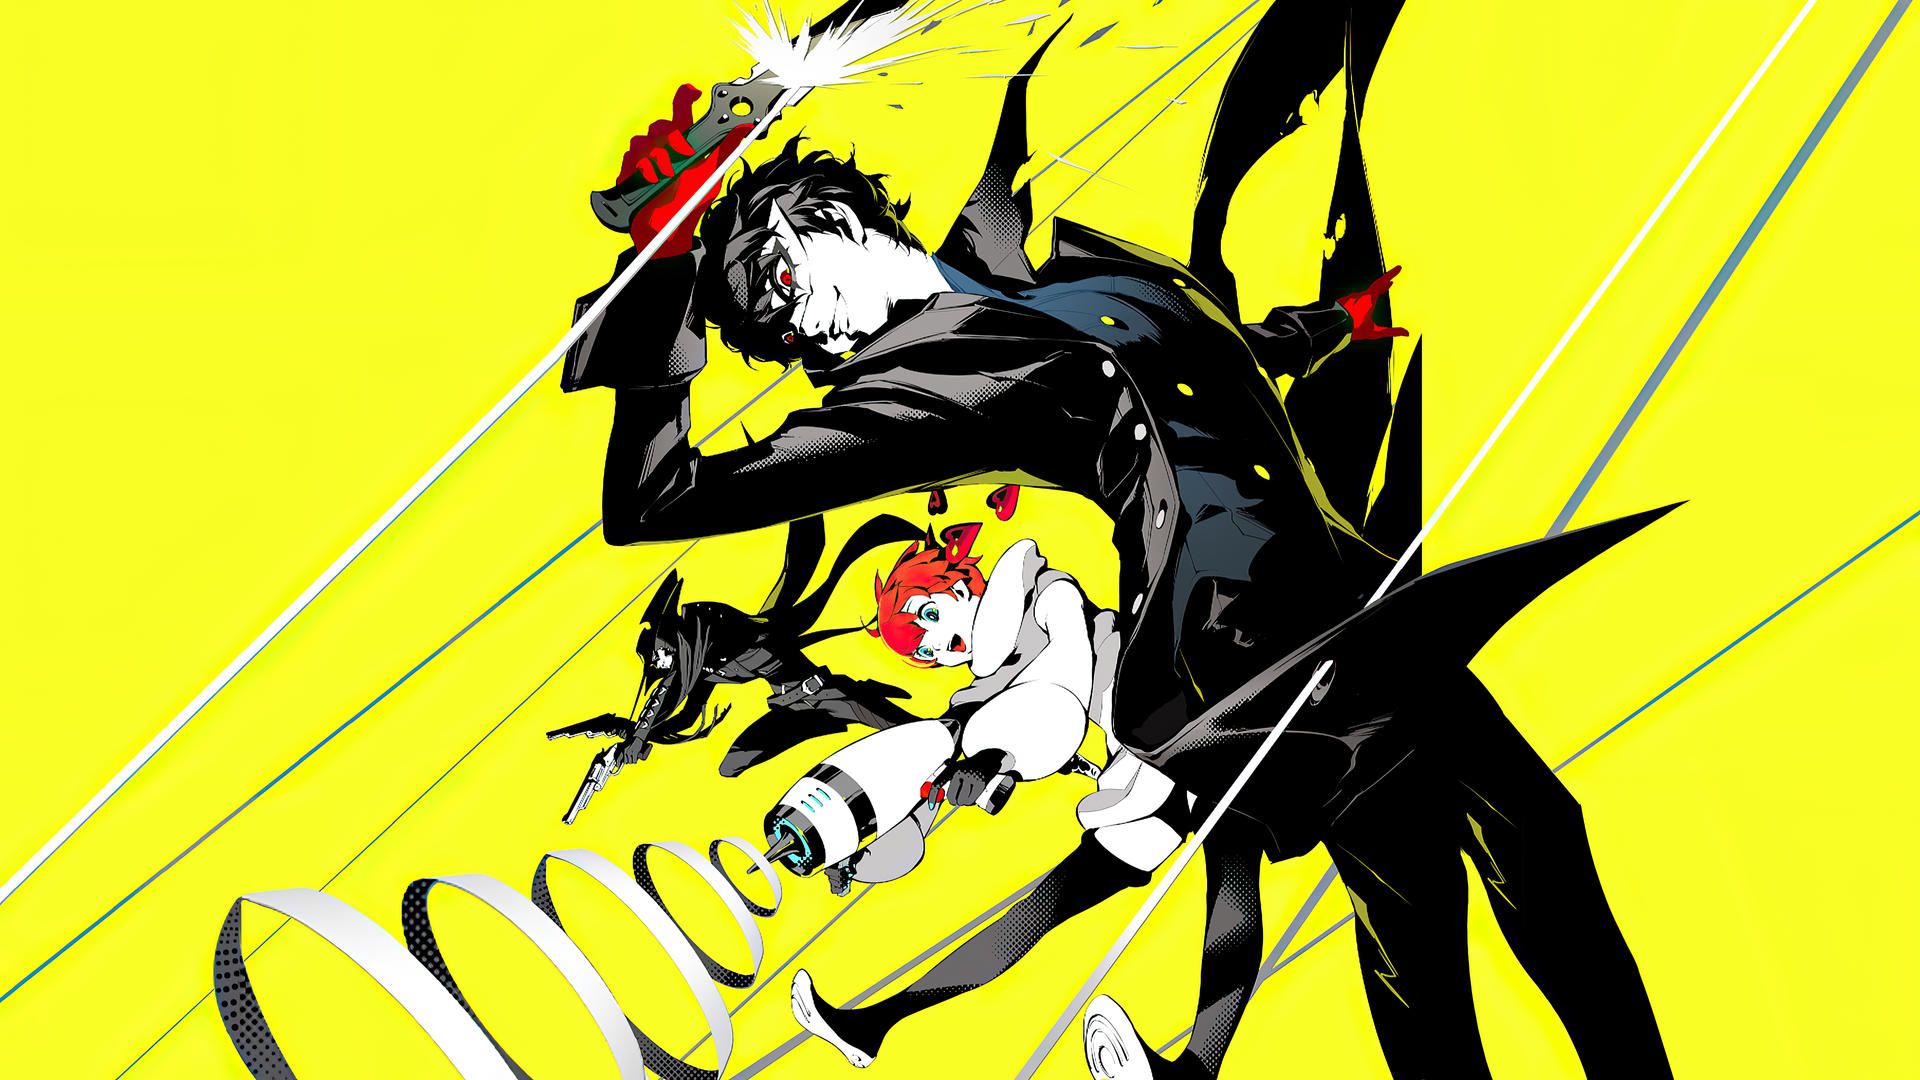 Persona 5 Strikers - Yellow Wallpaper by thetruemask on DeviantArt